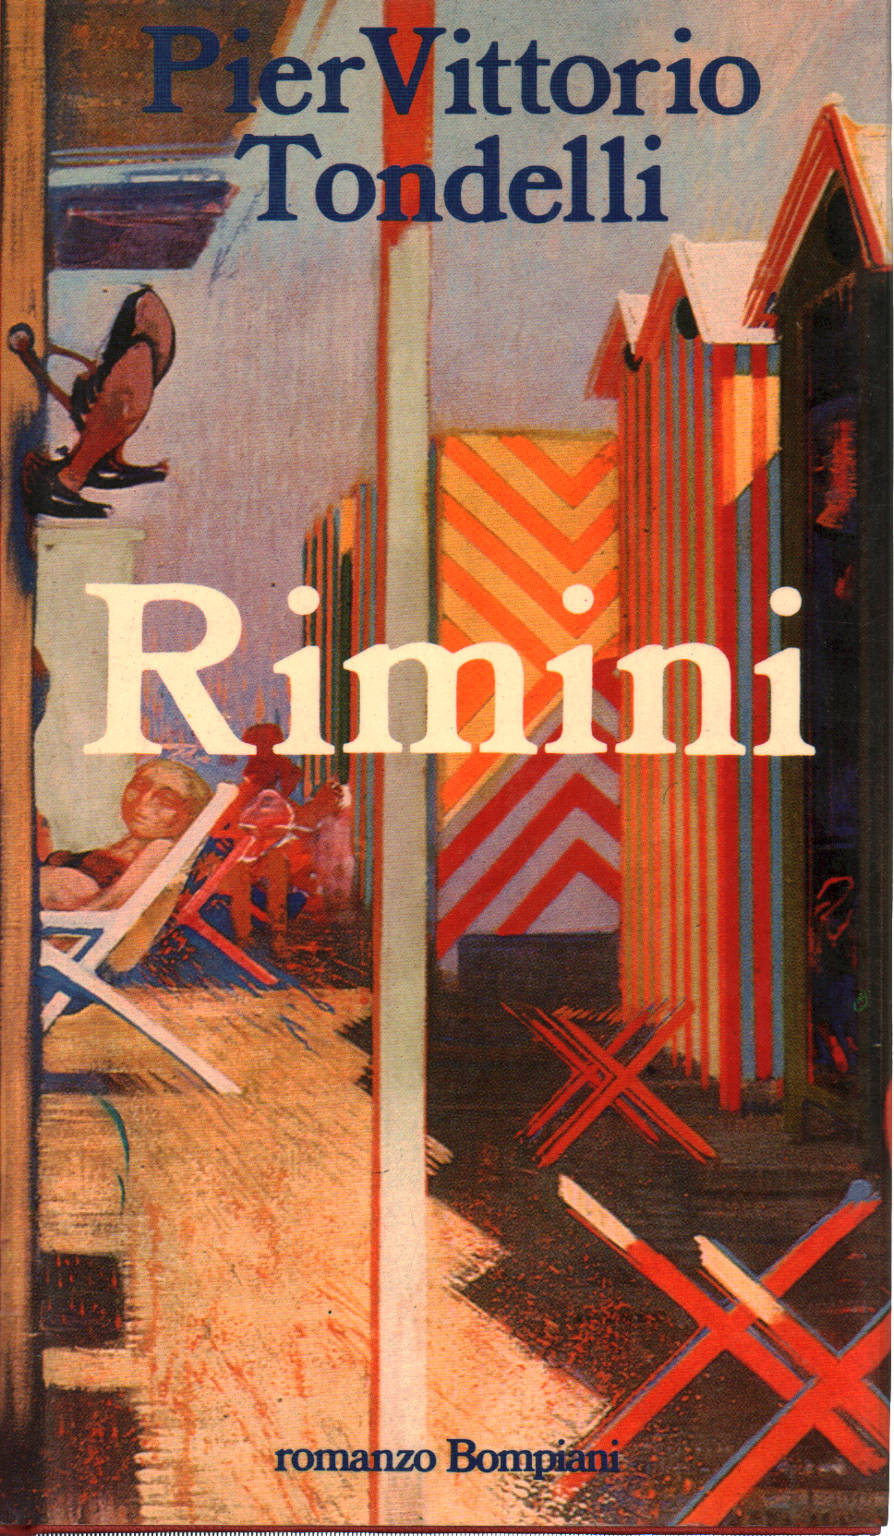 Rimini - Pier Vittorio Tondelli - Italian fiction - Storytelling - Library - dimanoinmano.it